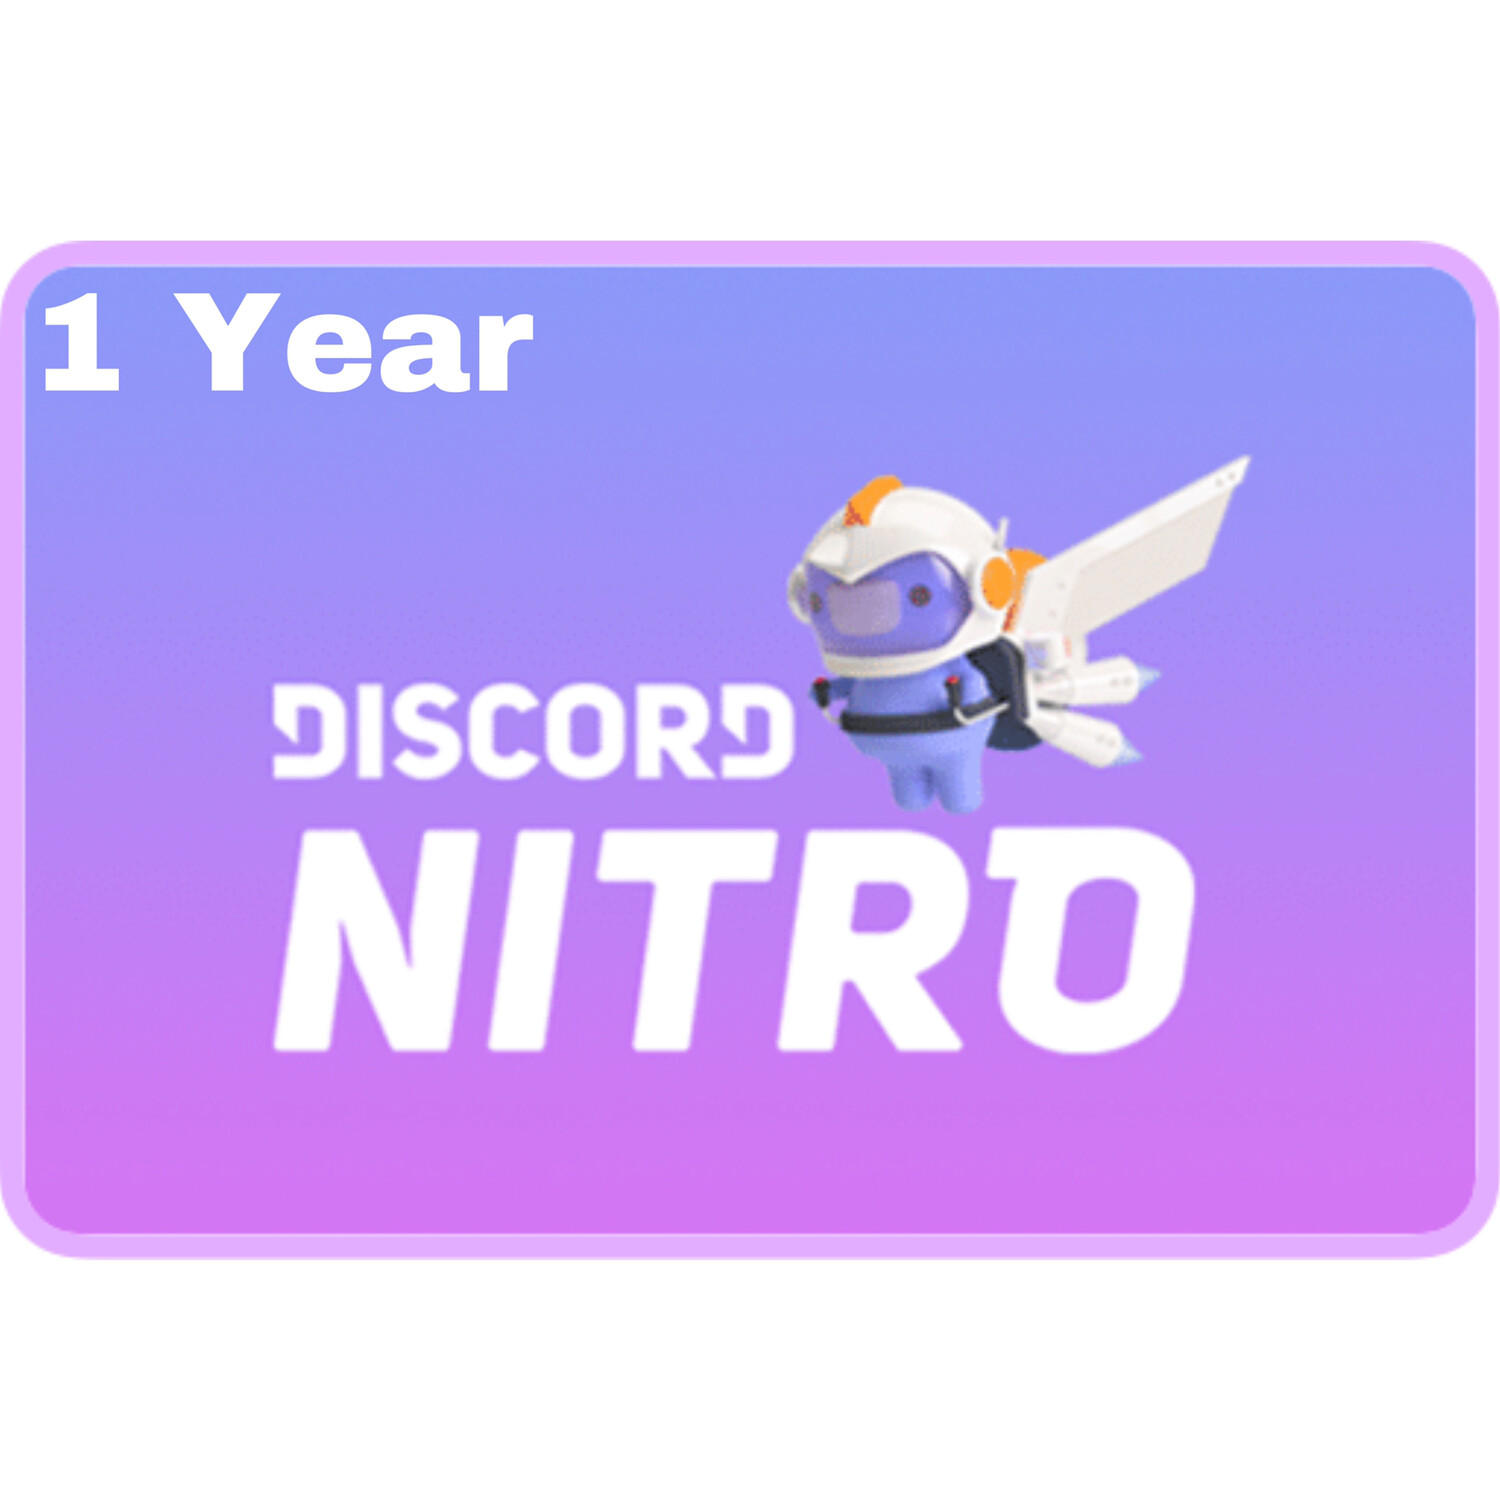 Discord Nitro 1 Year Gift